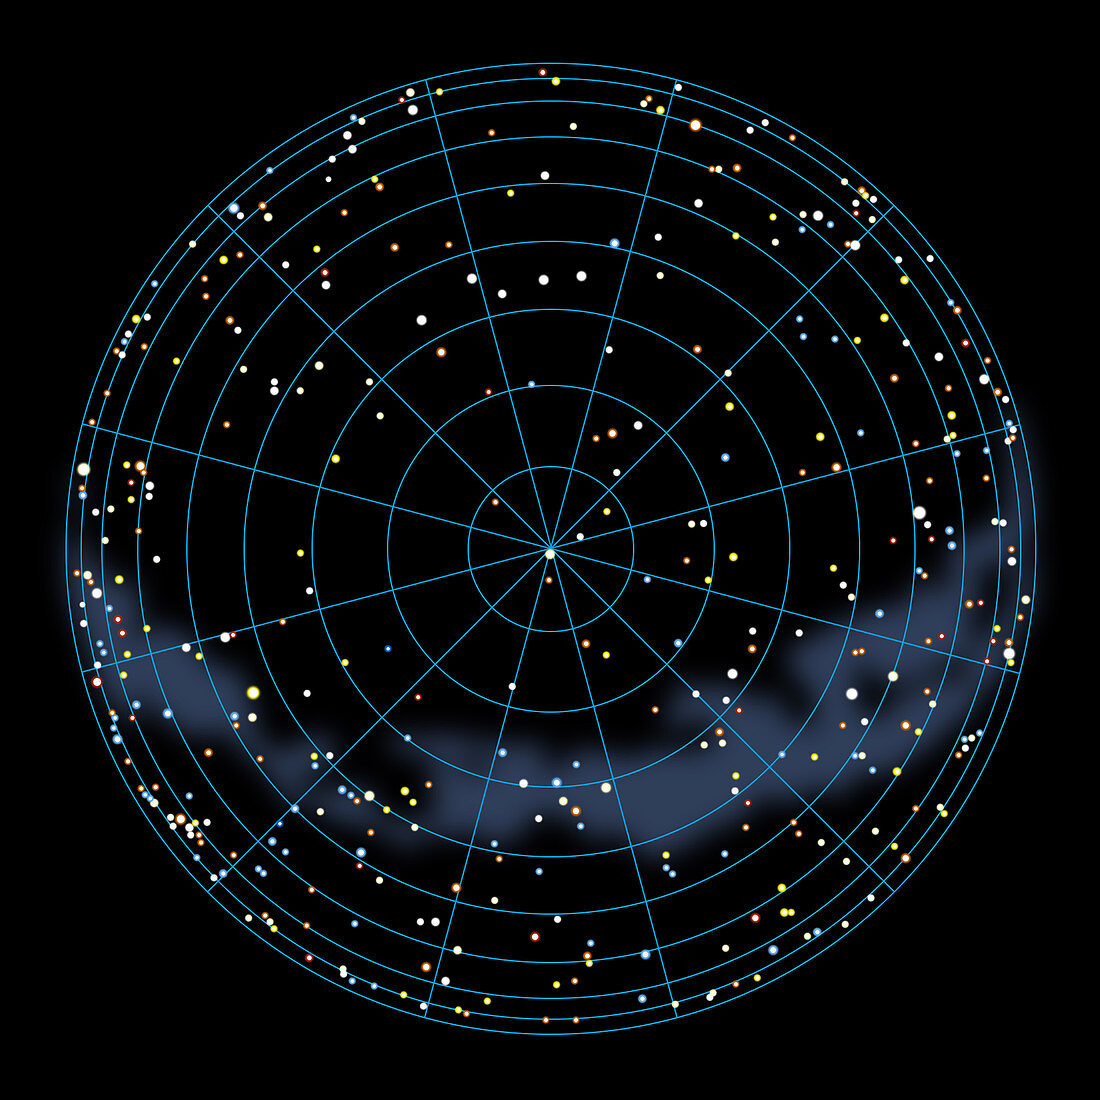 Artwork of the celestial northern hemisphere